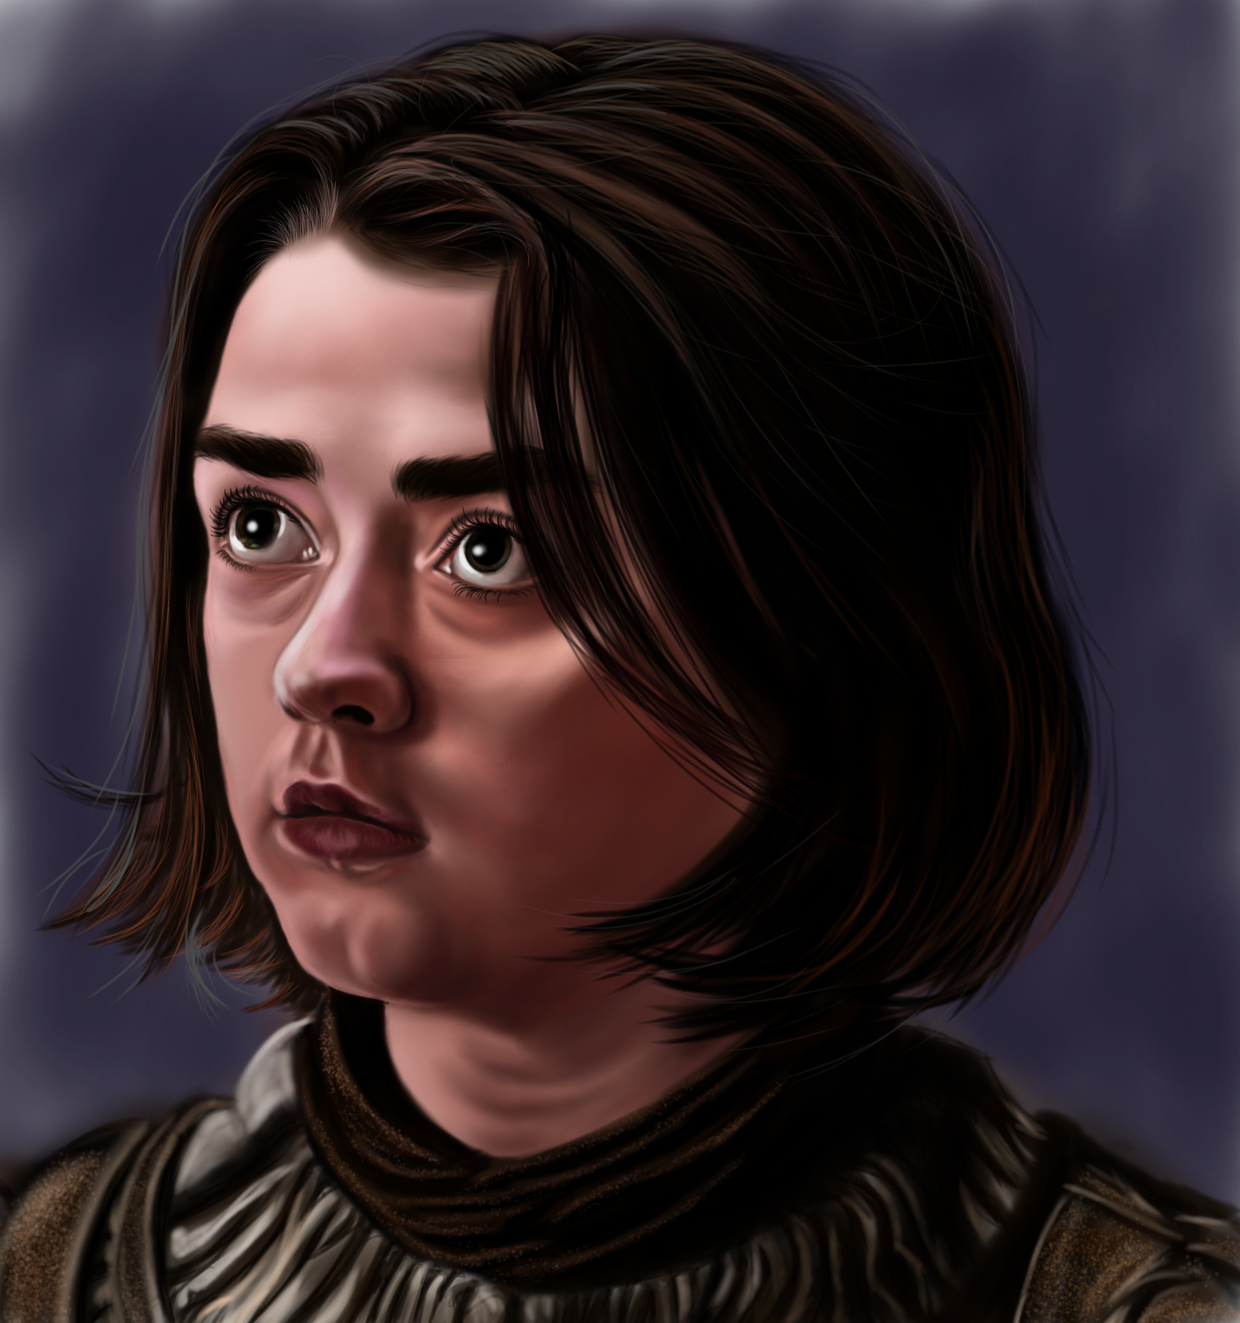 Francisftlp-Digital Drawing of Arya Stark-Step 9.png